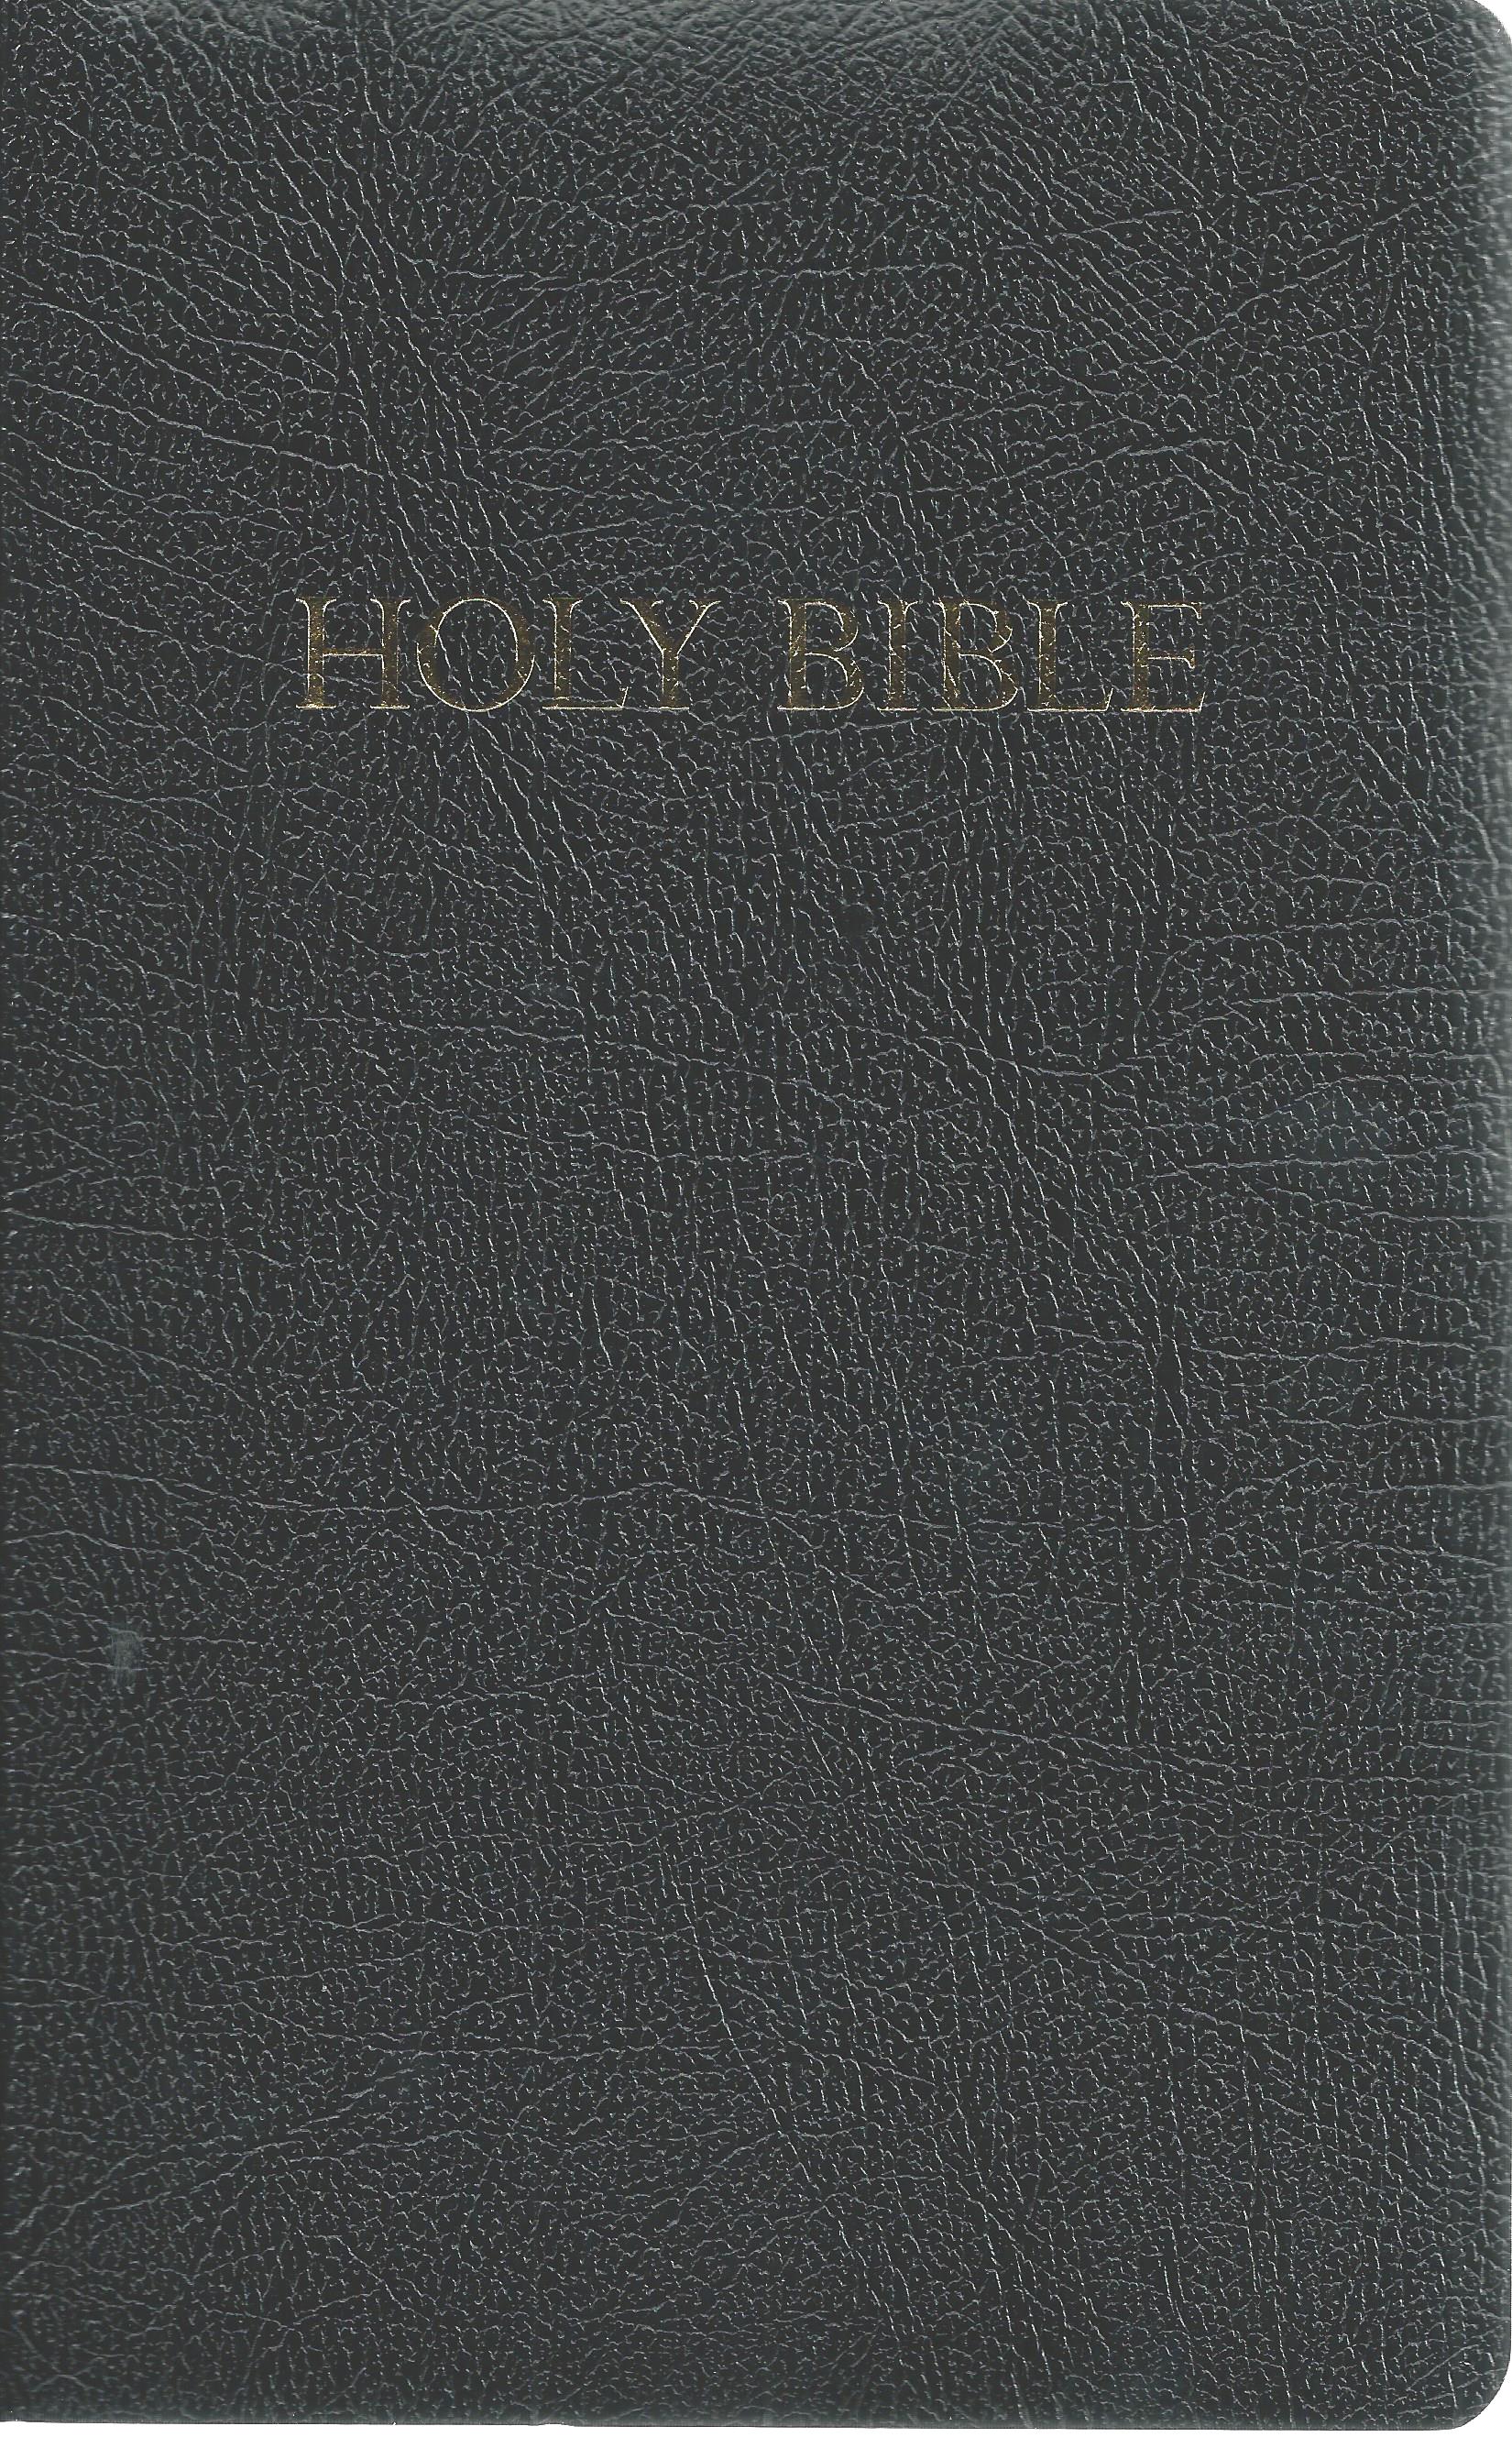 Anglais Bible, gift & award, noir, imitation cuir - King James Version